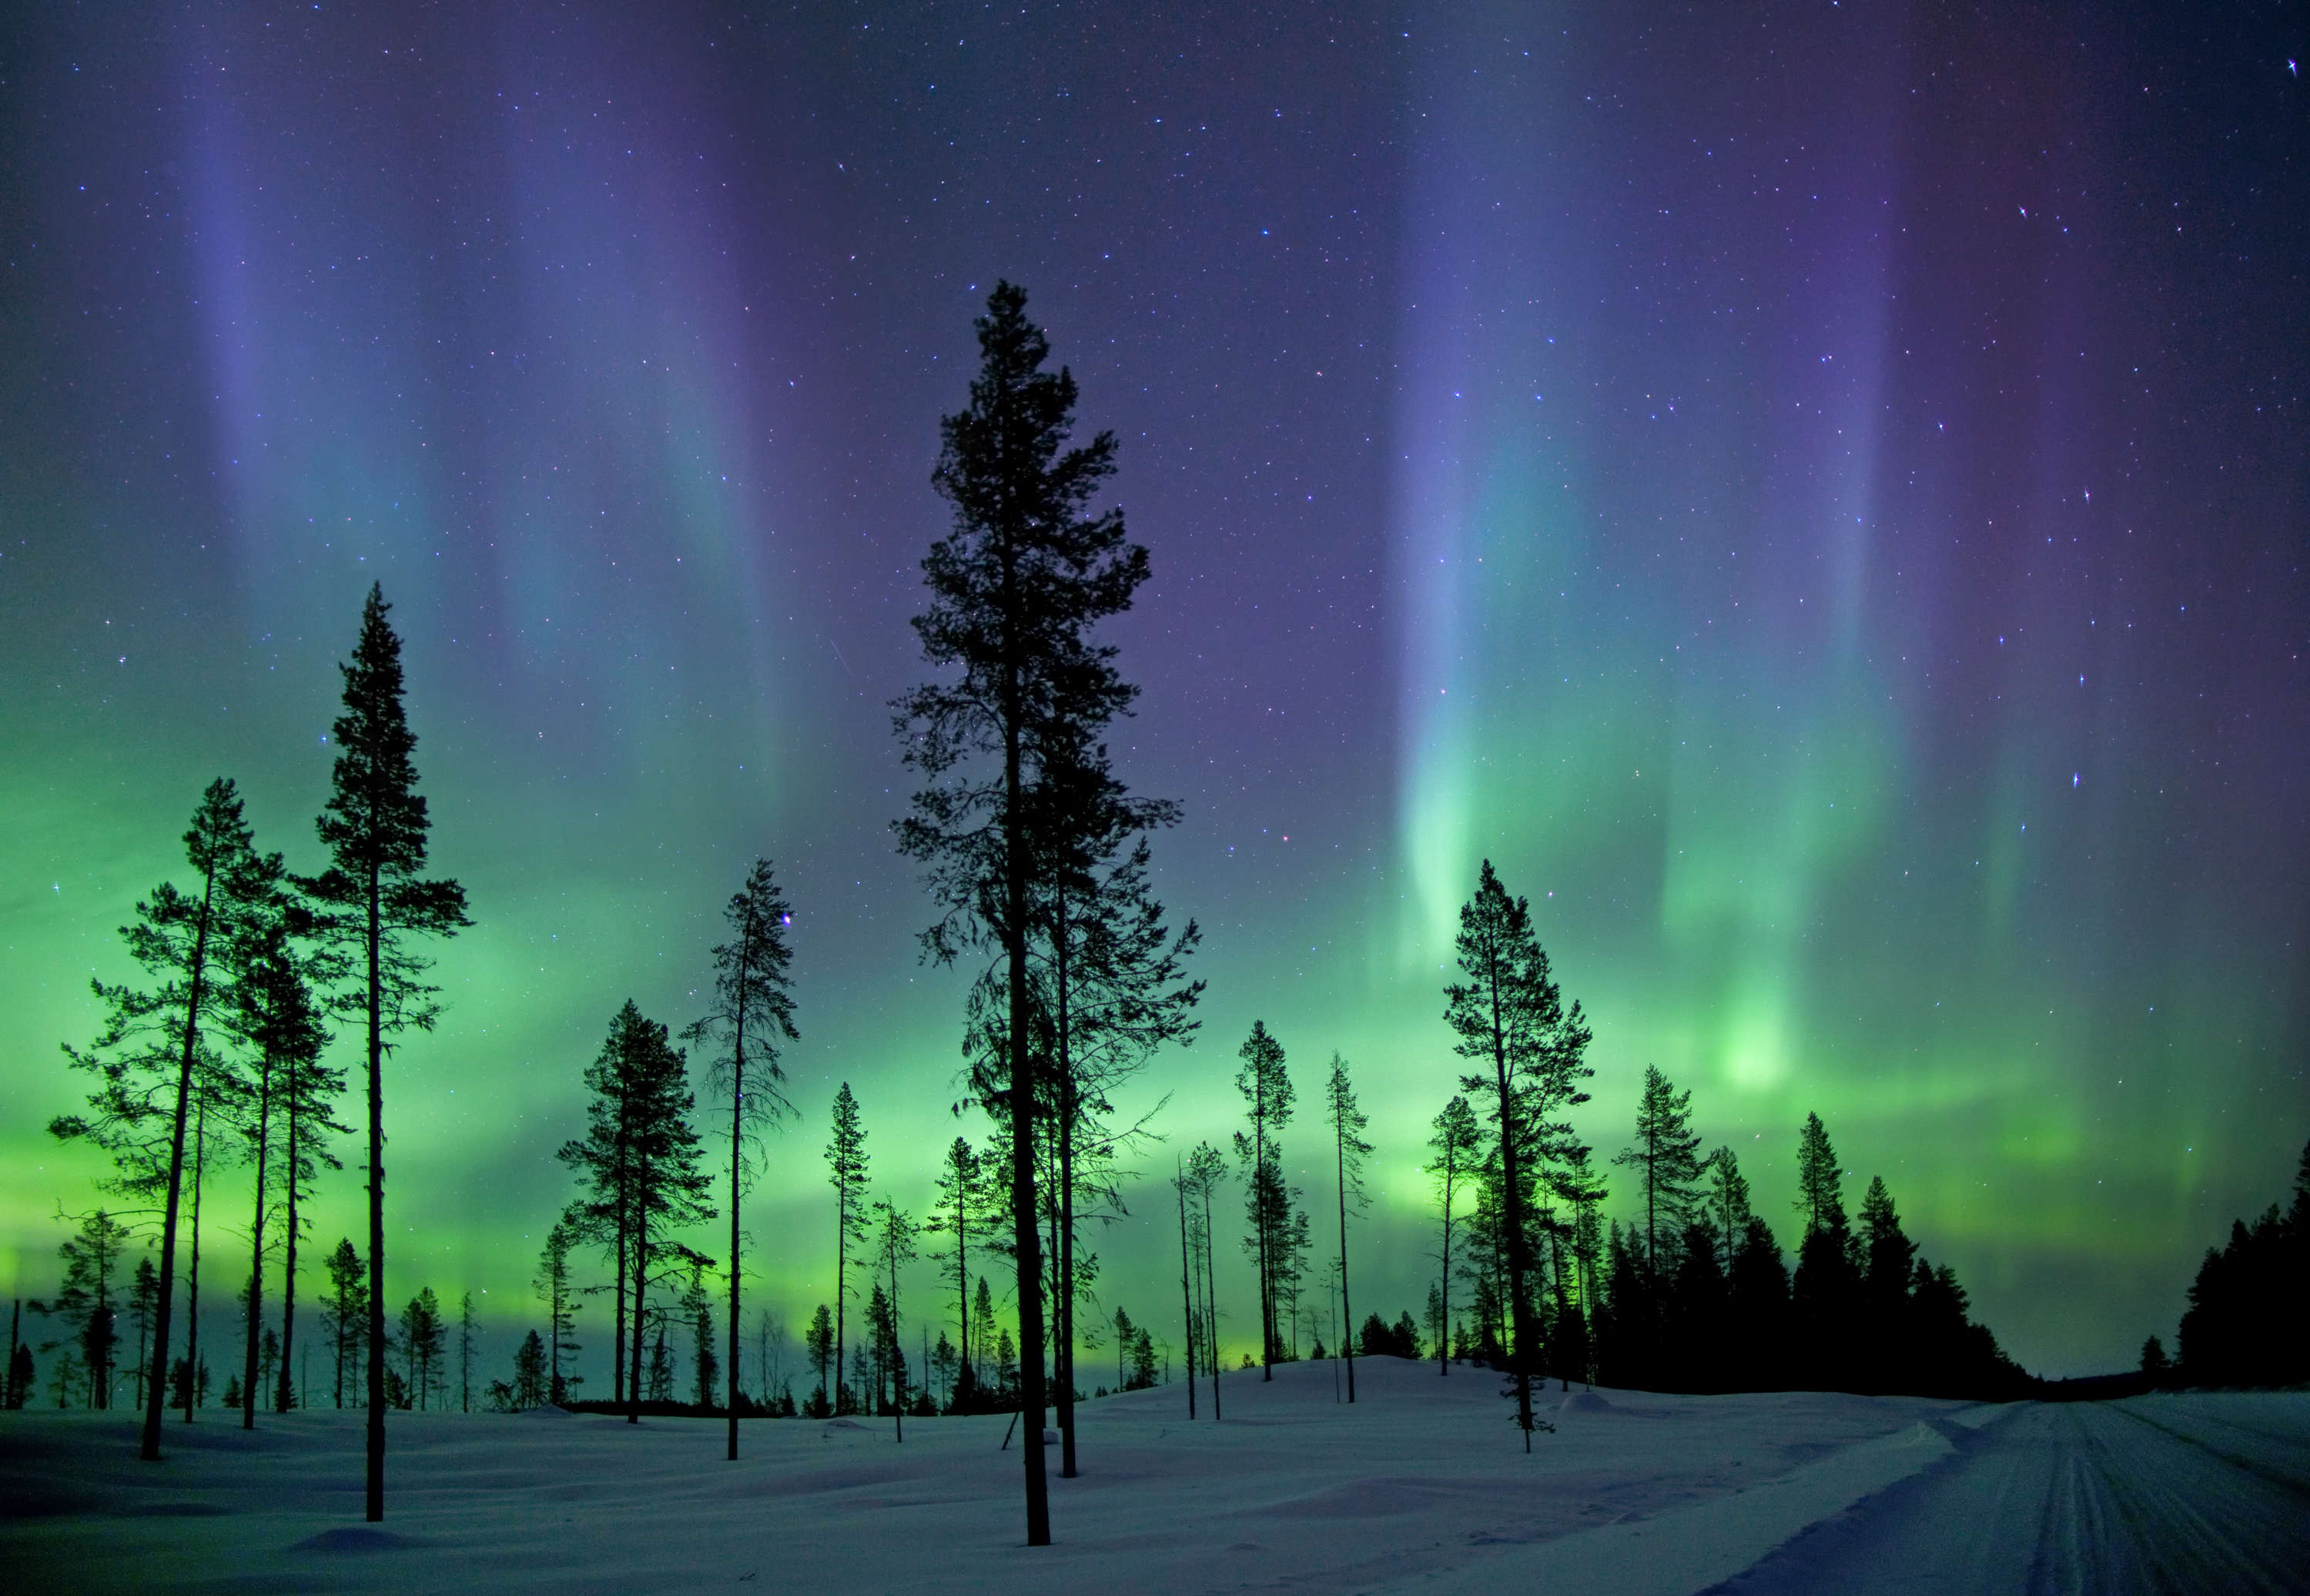 Northern. Аврора бореалис Северное сияние. Northern Lights Ranch, Лапландия Финляндия. Северное полярное сияние. Северное сияние в Финляндии.